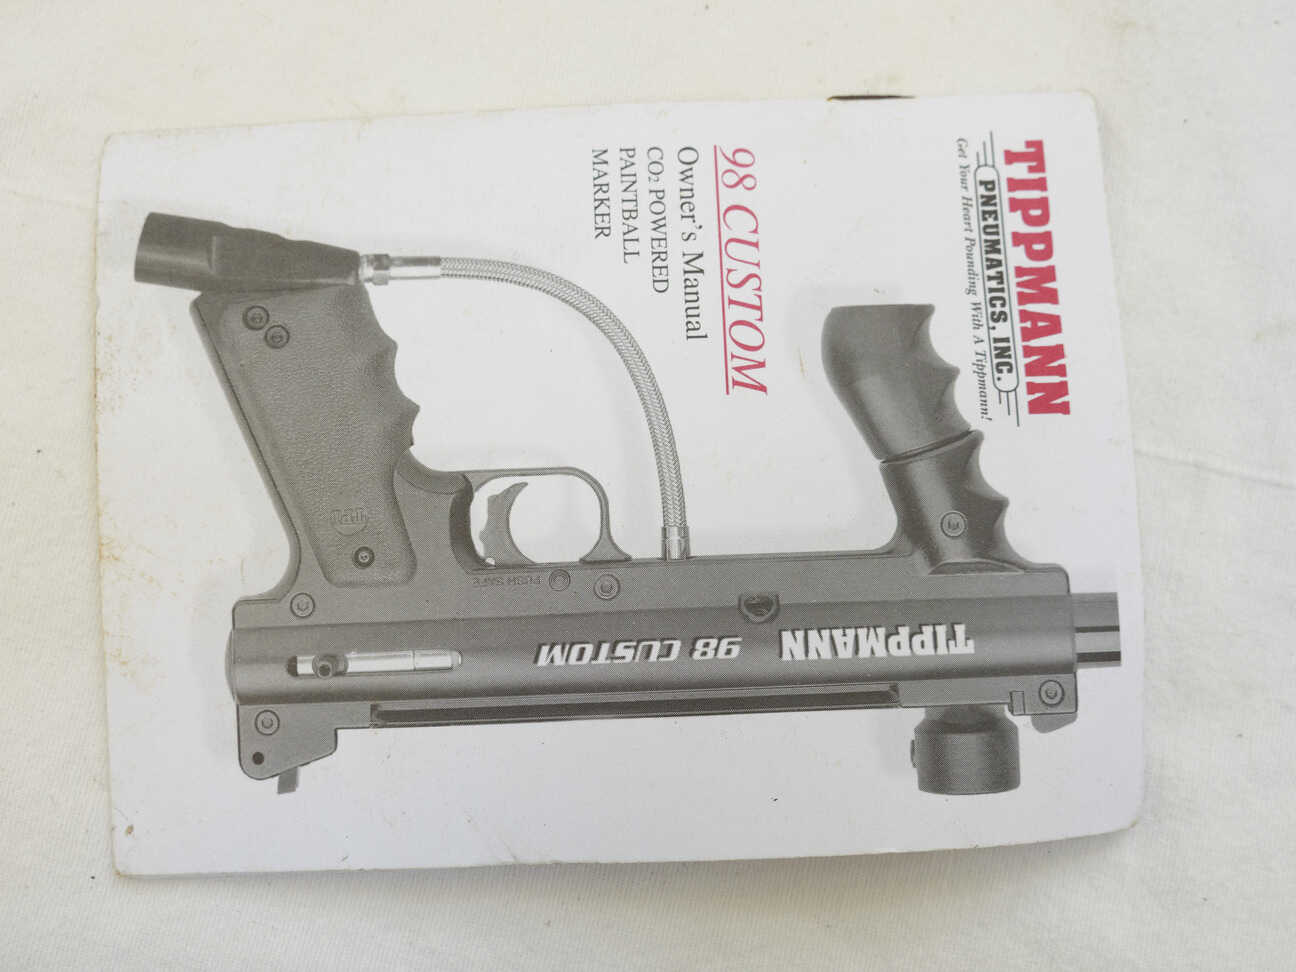 Tippmann 98 custom manual, used shape, not flat